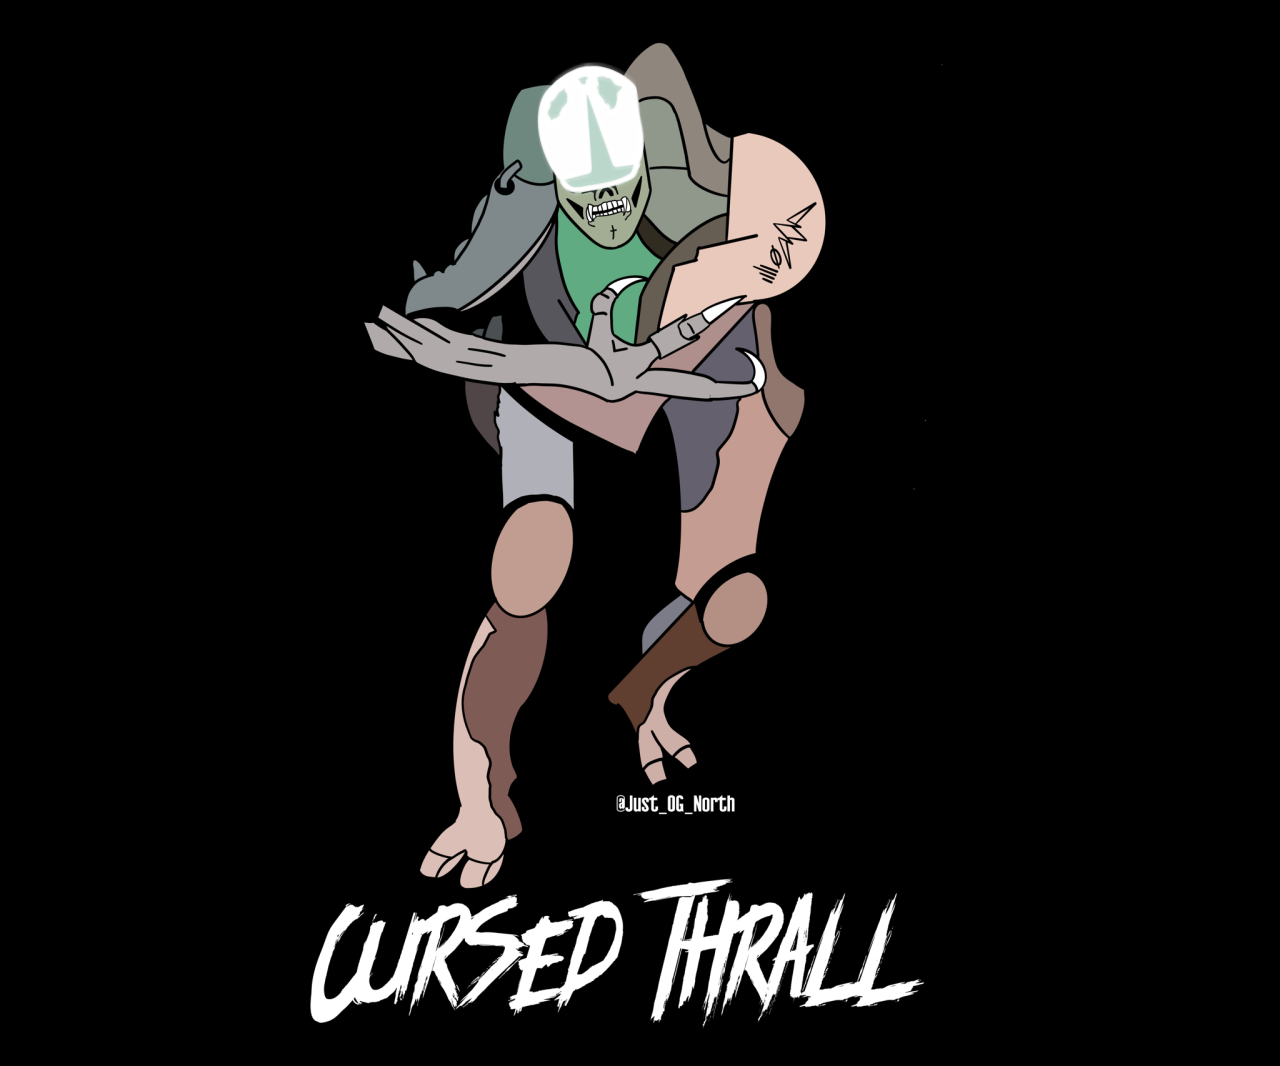 Cursed Thrall